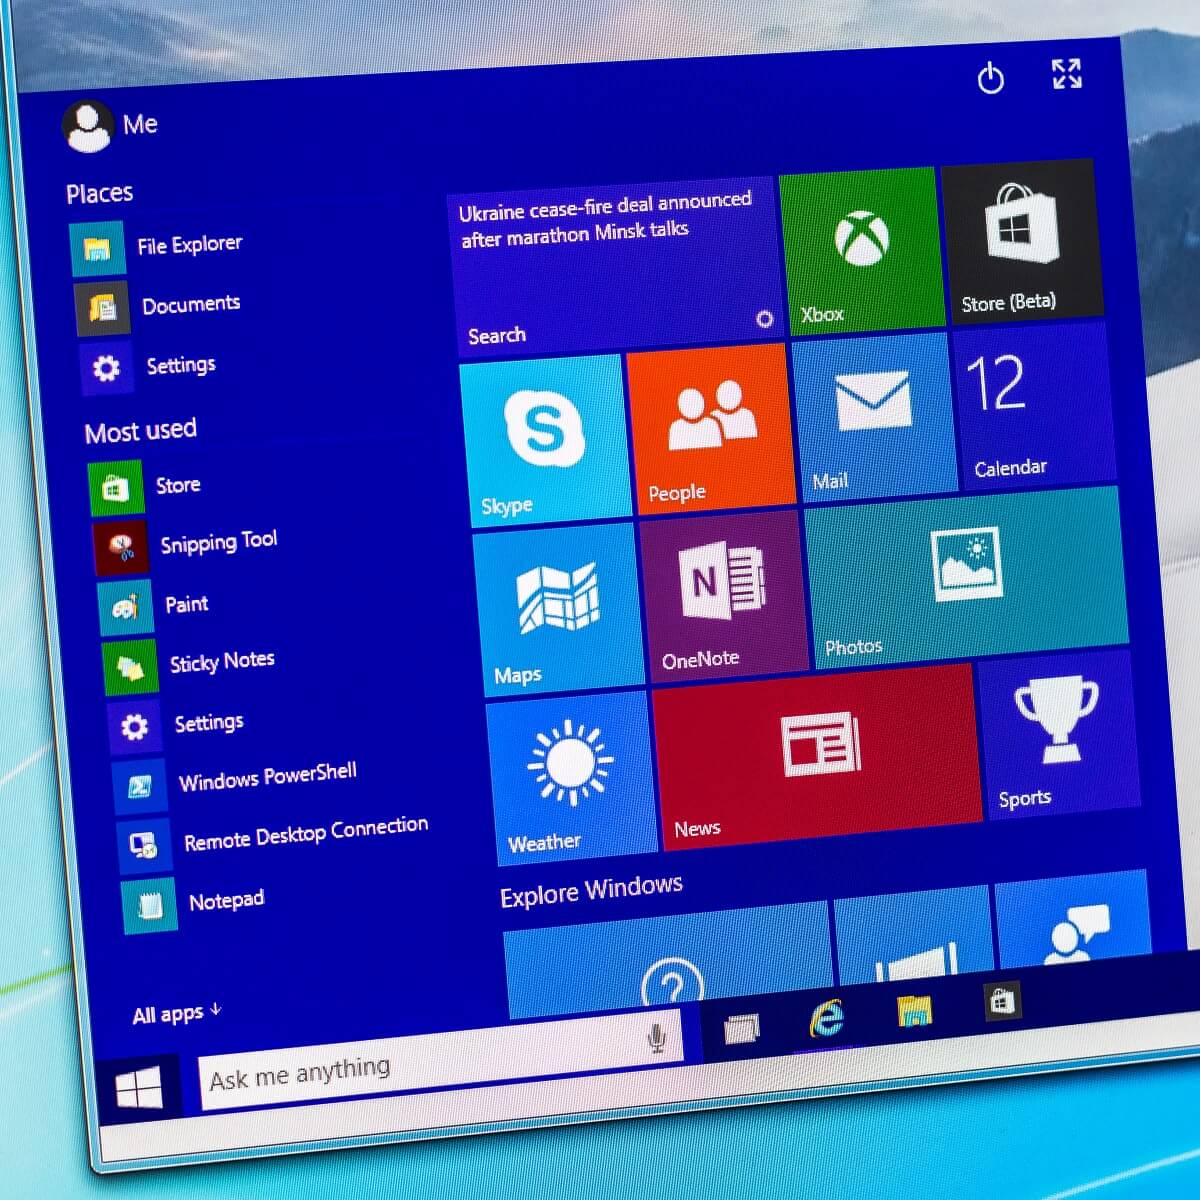 Windows 10's iconic Start Menu will get a fresh redesign